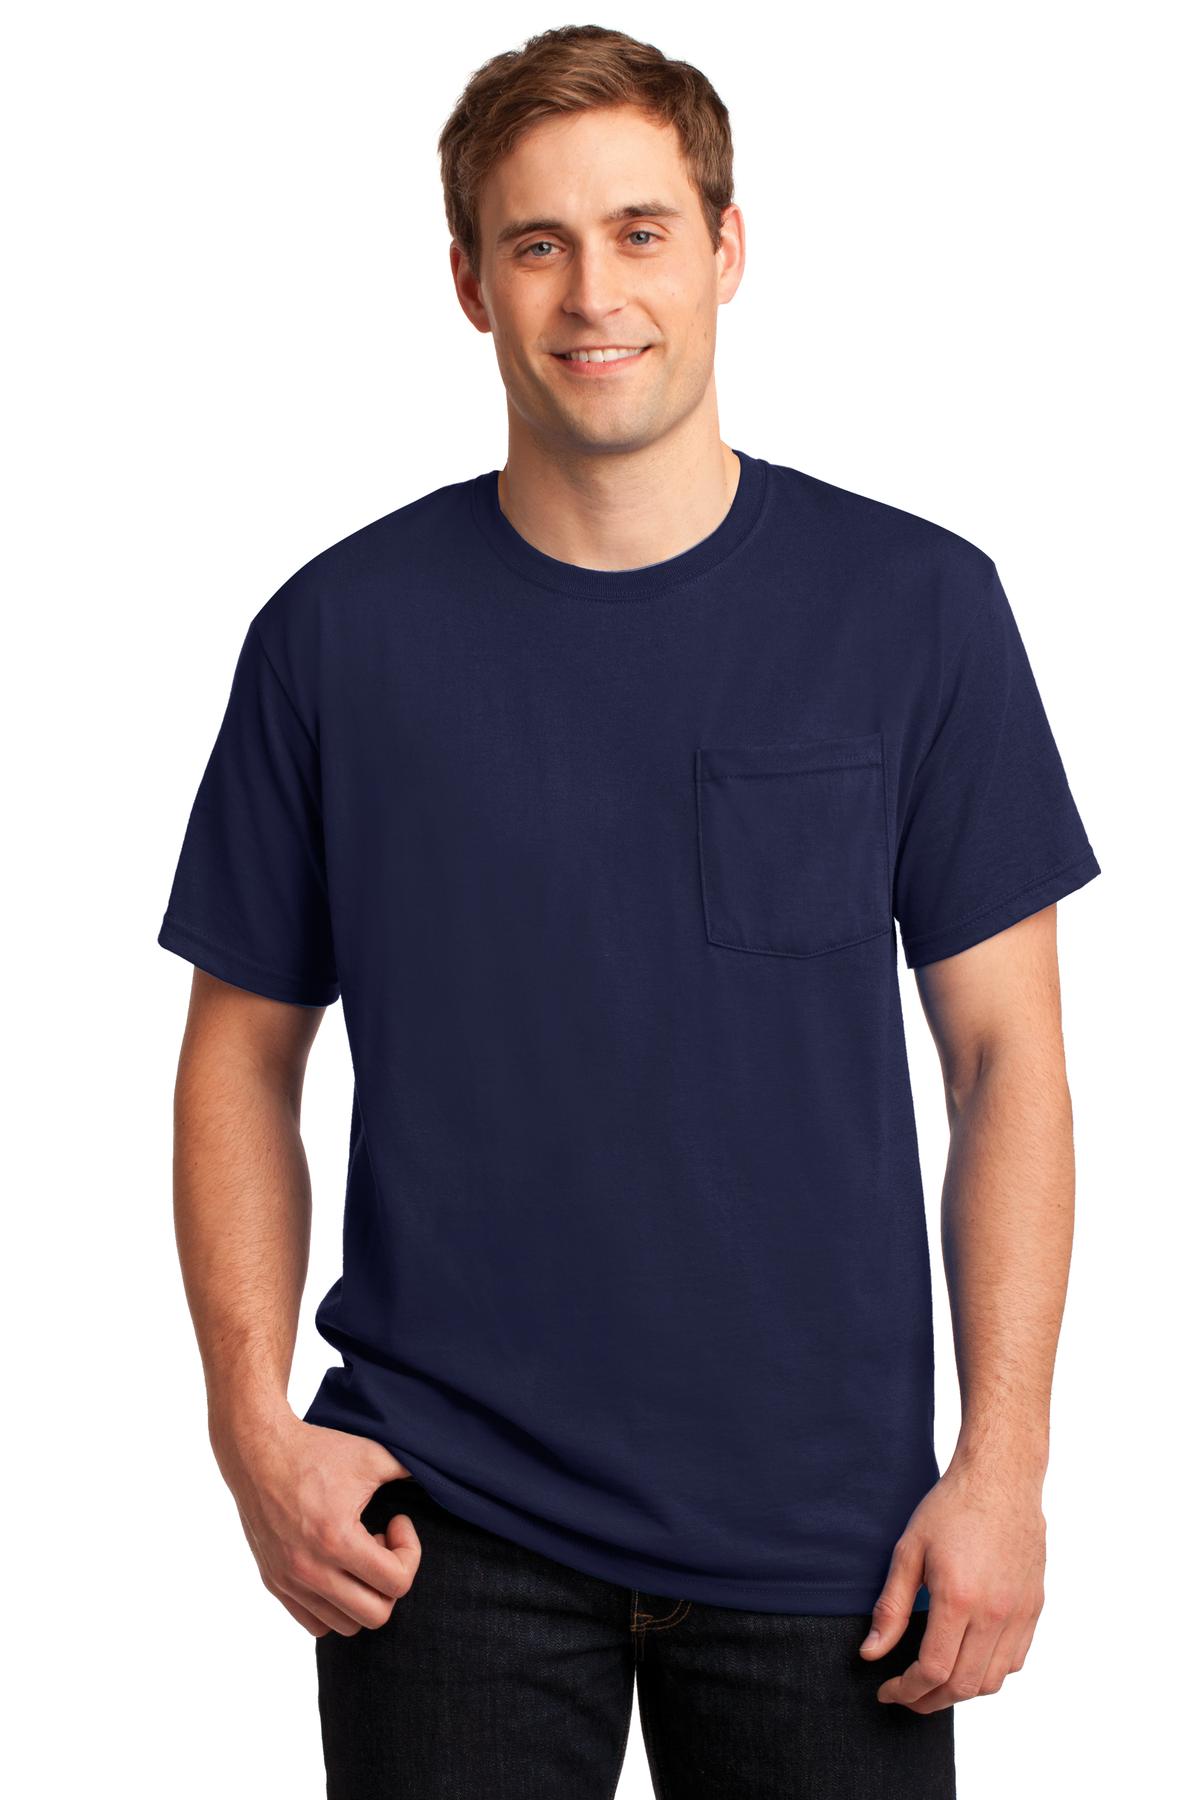 JERZEES® - Dri-Power® 50/50 Cotton/Poly Pocket T-Shirt. 29MP [Navy] - DFW Impression